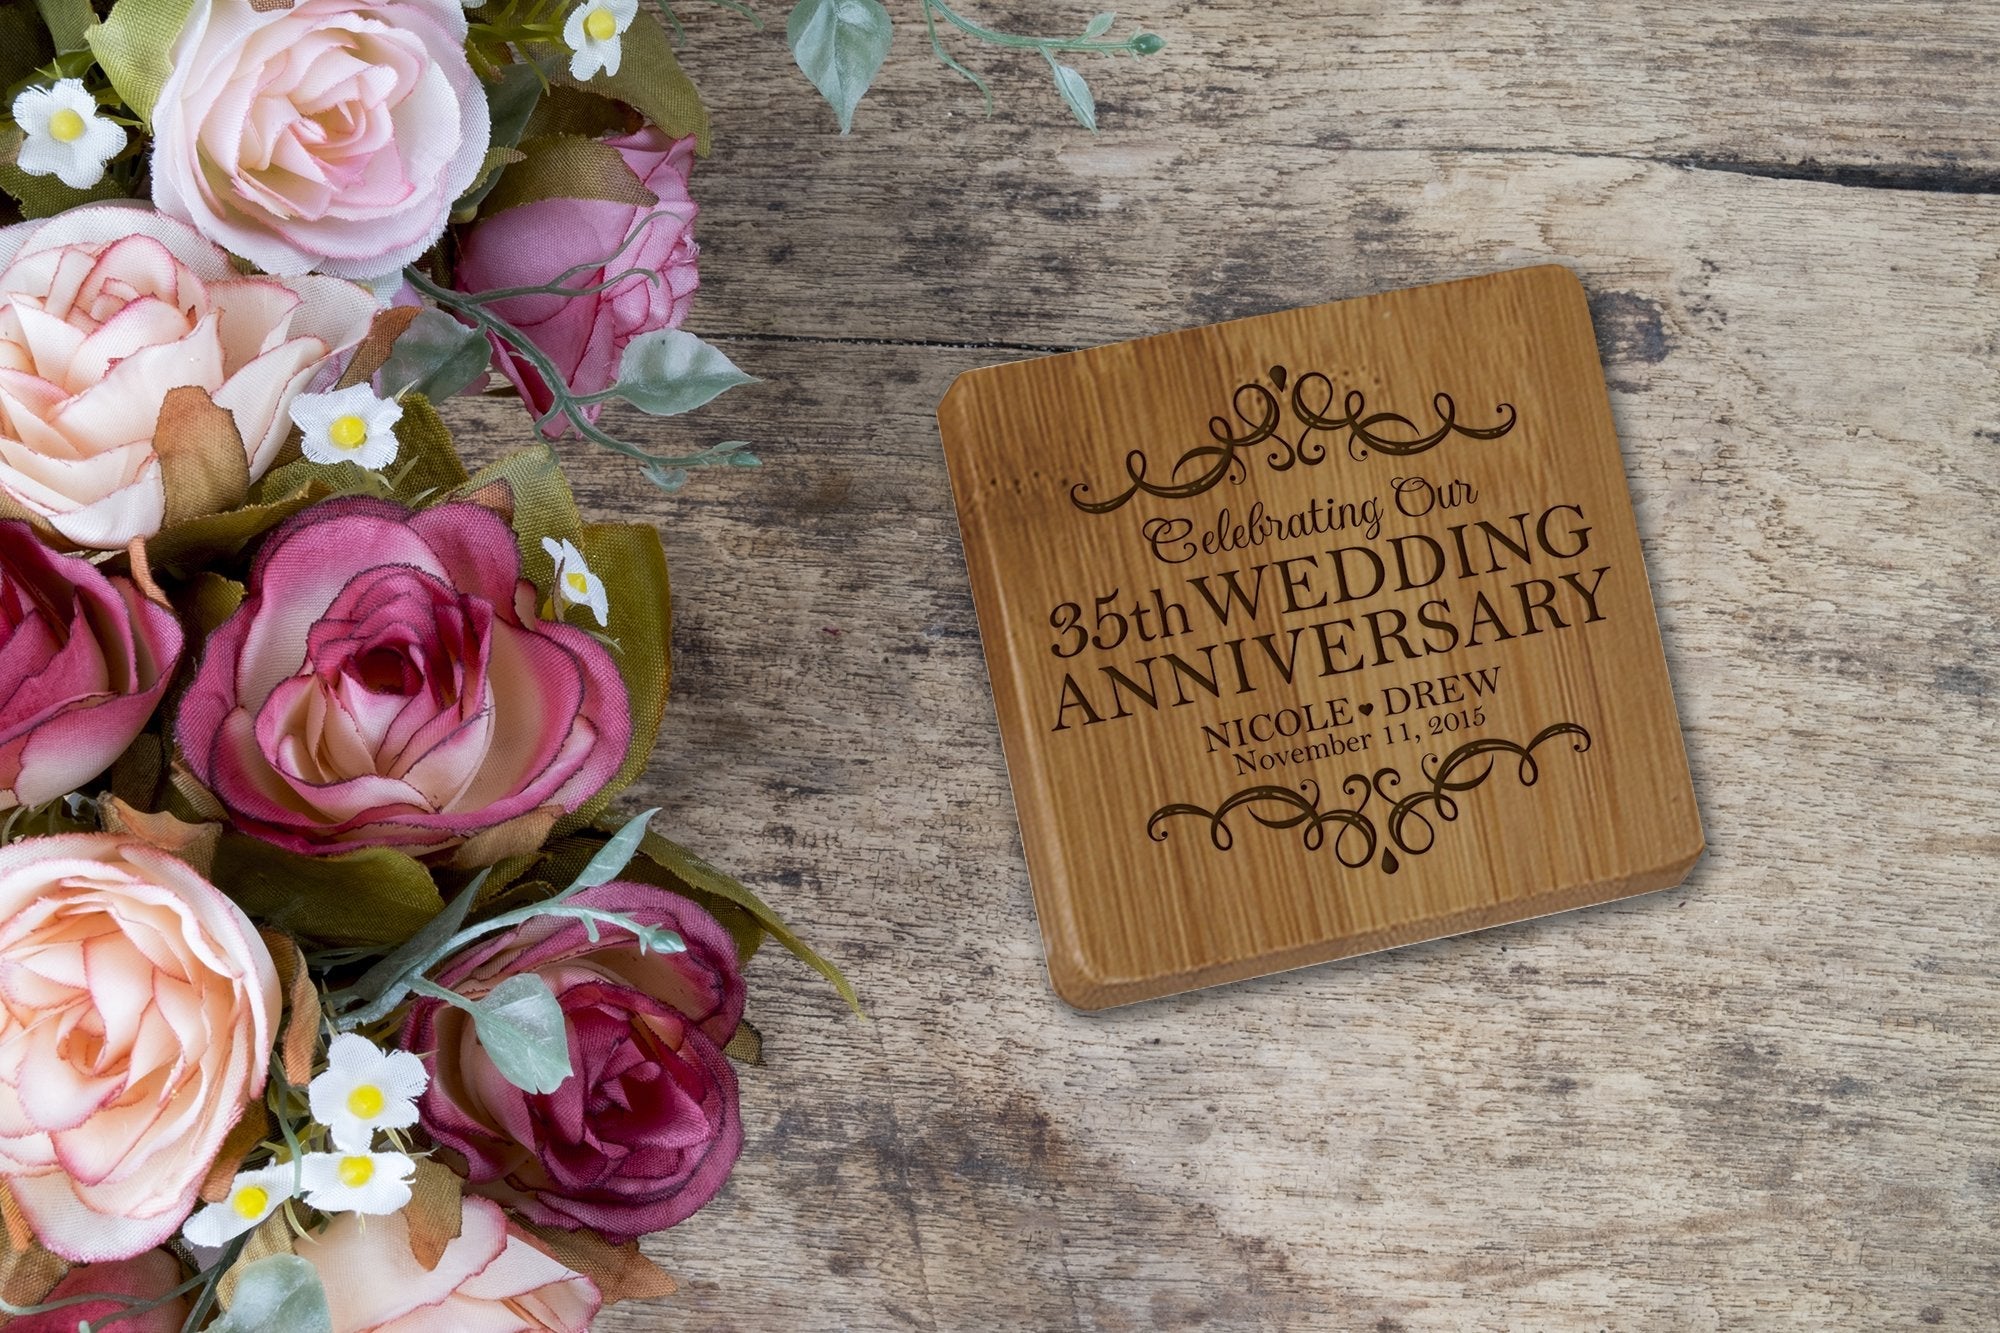 Personalized 35th Wedding Anniversary Bamboo 6pcs Coaster Set - LifeSong Milestones